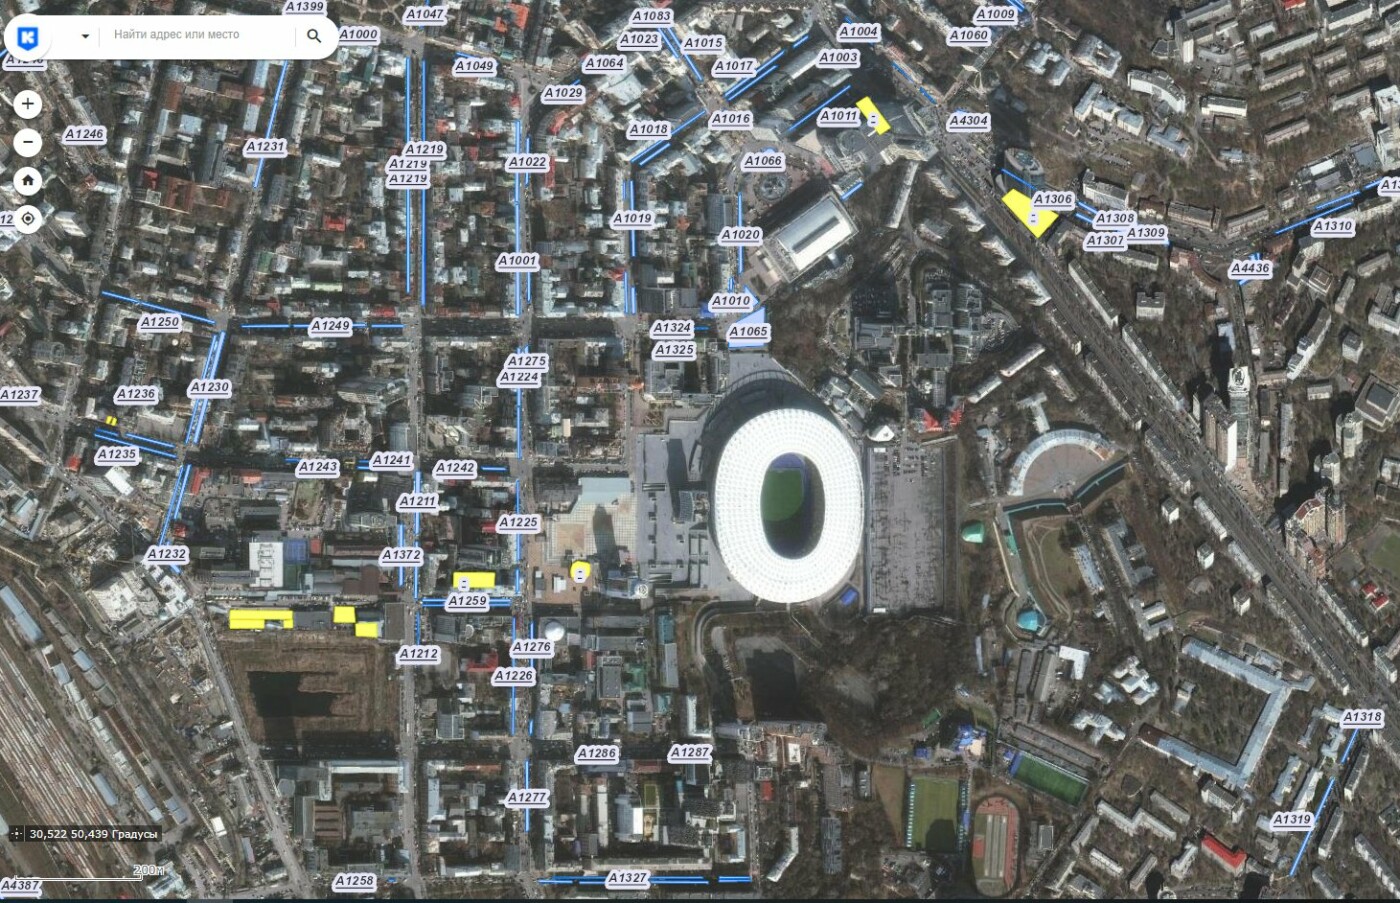 Карта парковок возле "Олимпийского", Фото: КМДА